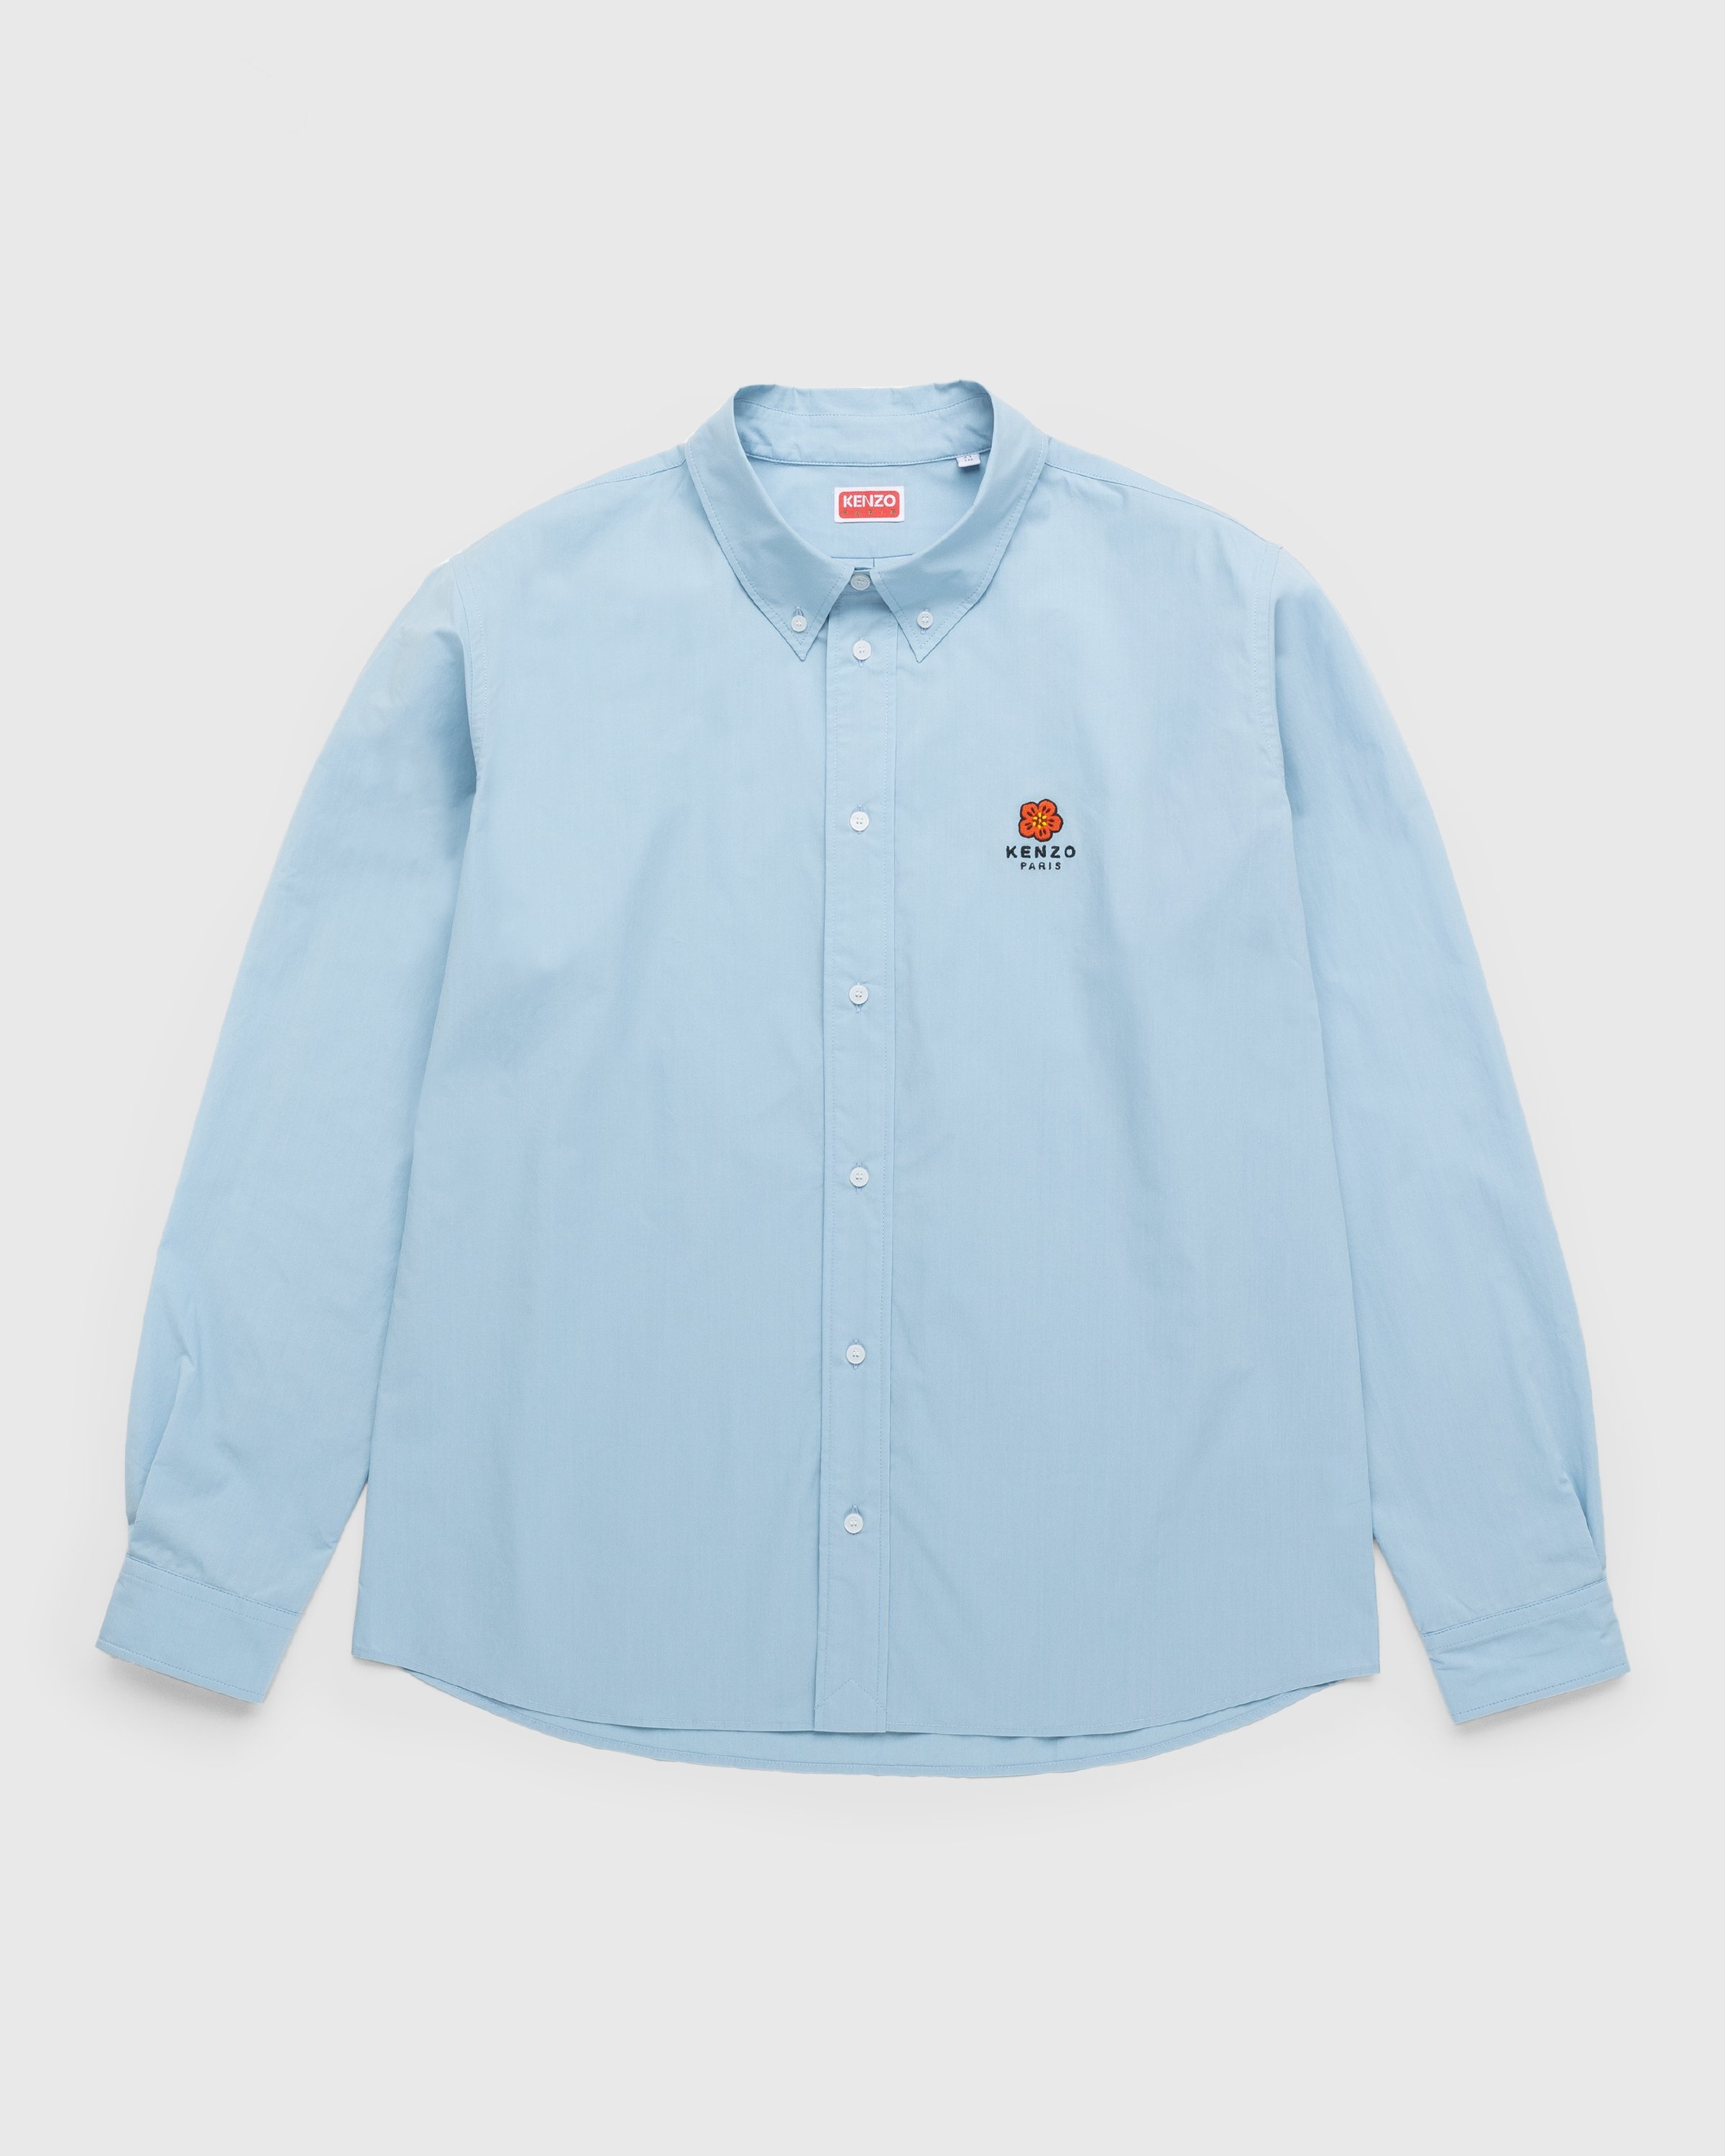 Kenzo – Shirt Sky Blue - Longsleeve Shirts - Blue - Image 1